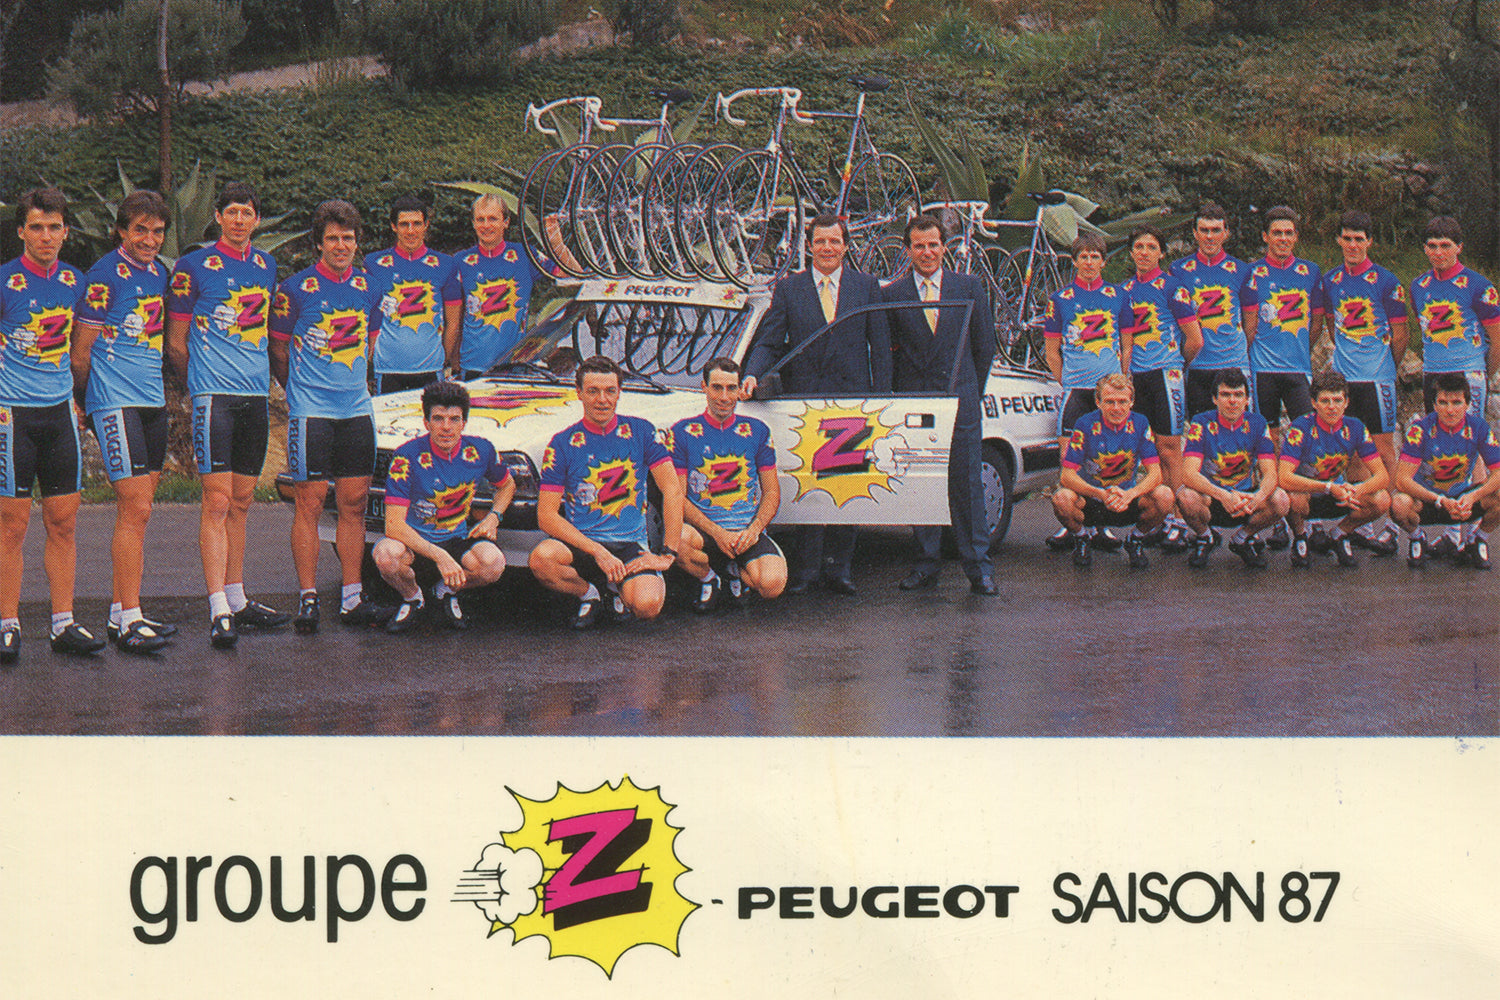 Vêtements Z-Peugeot Cycling Team postcard from 1987.